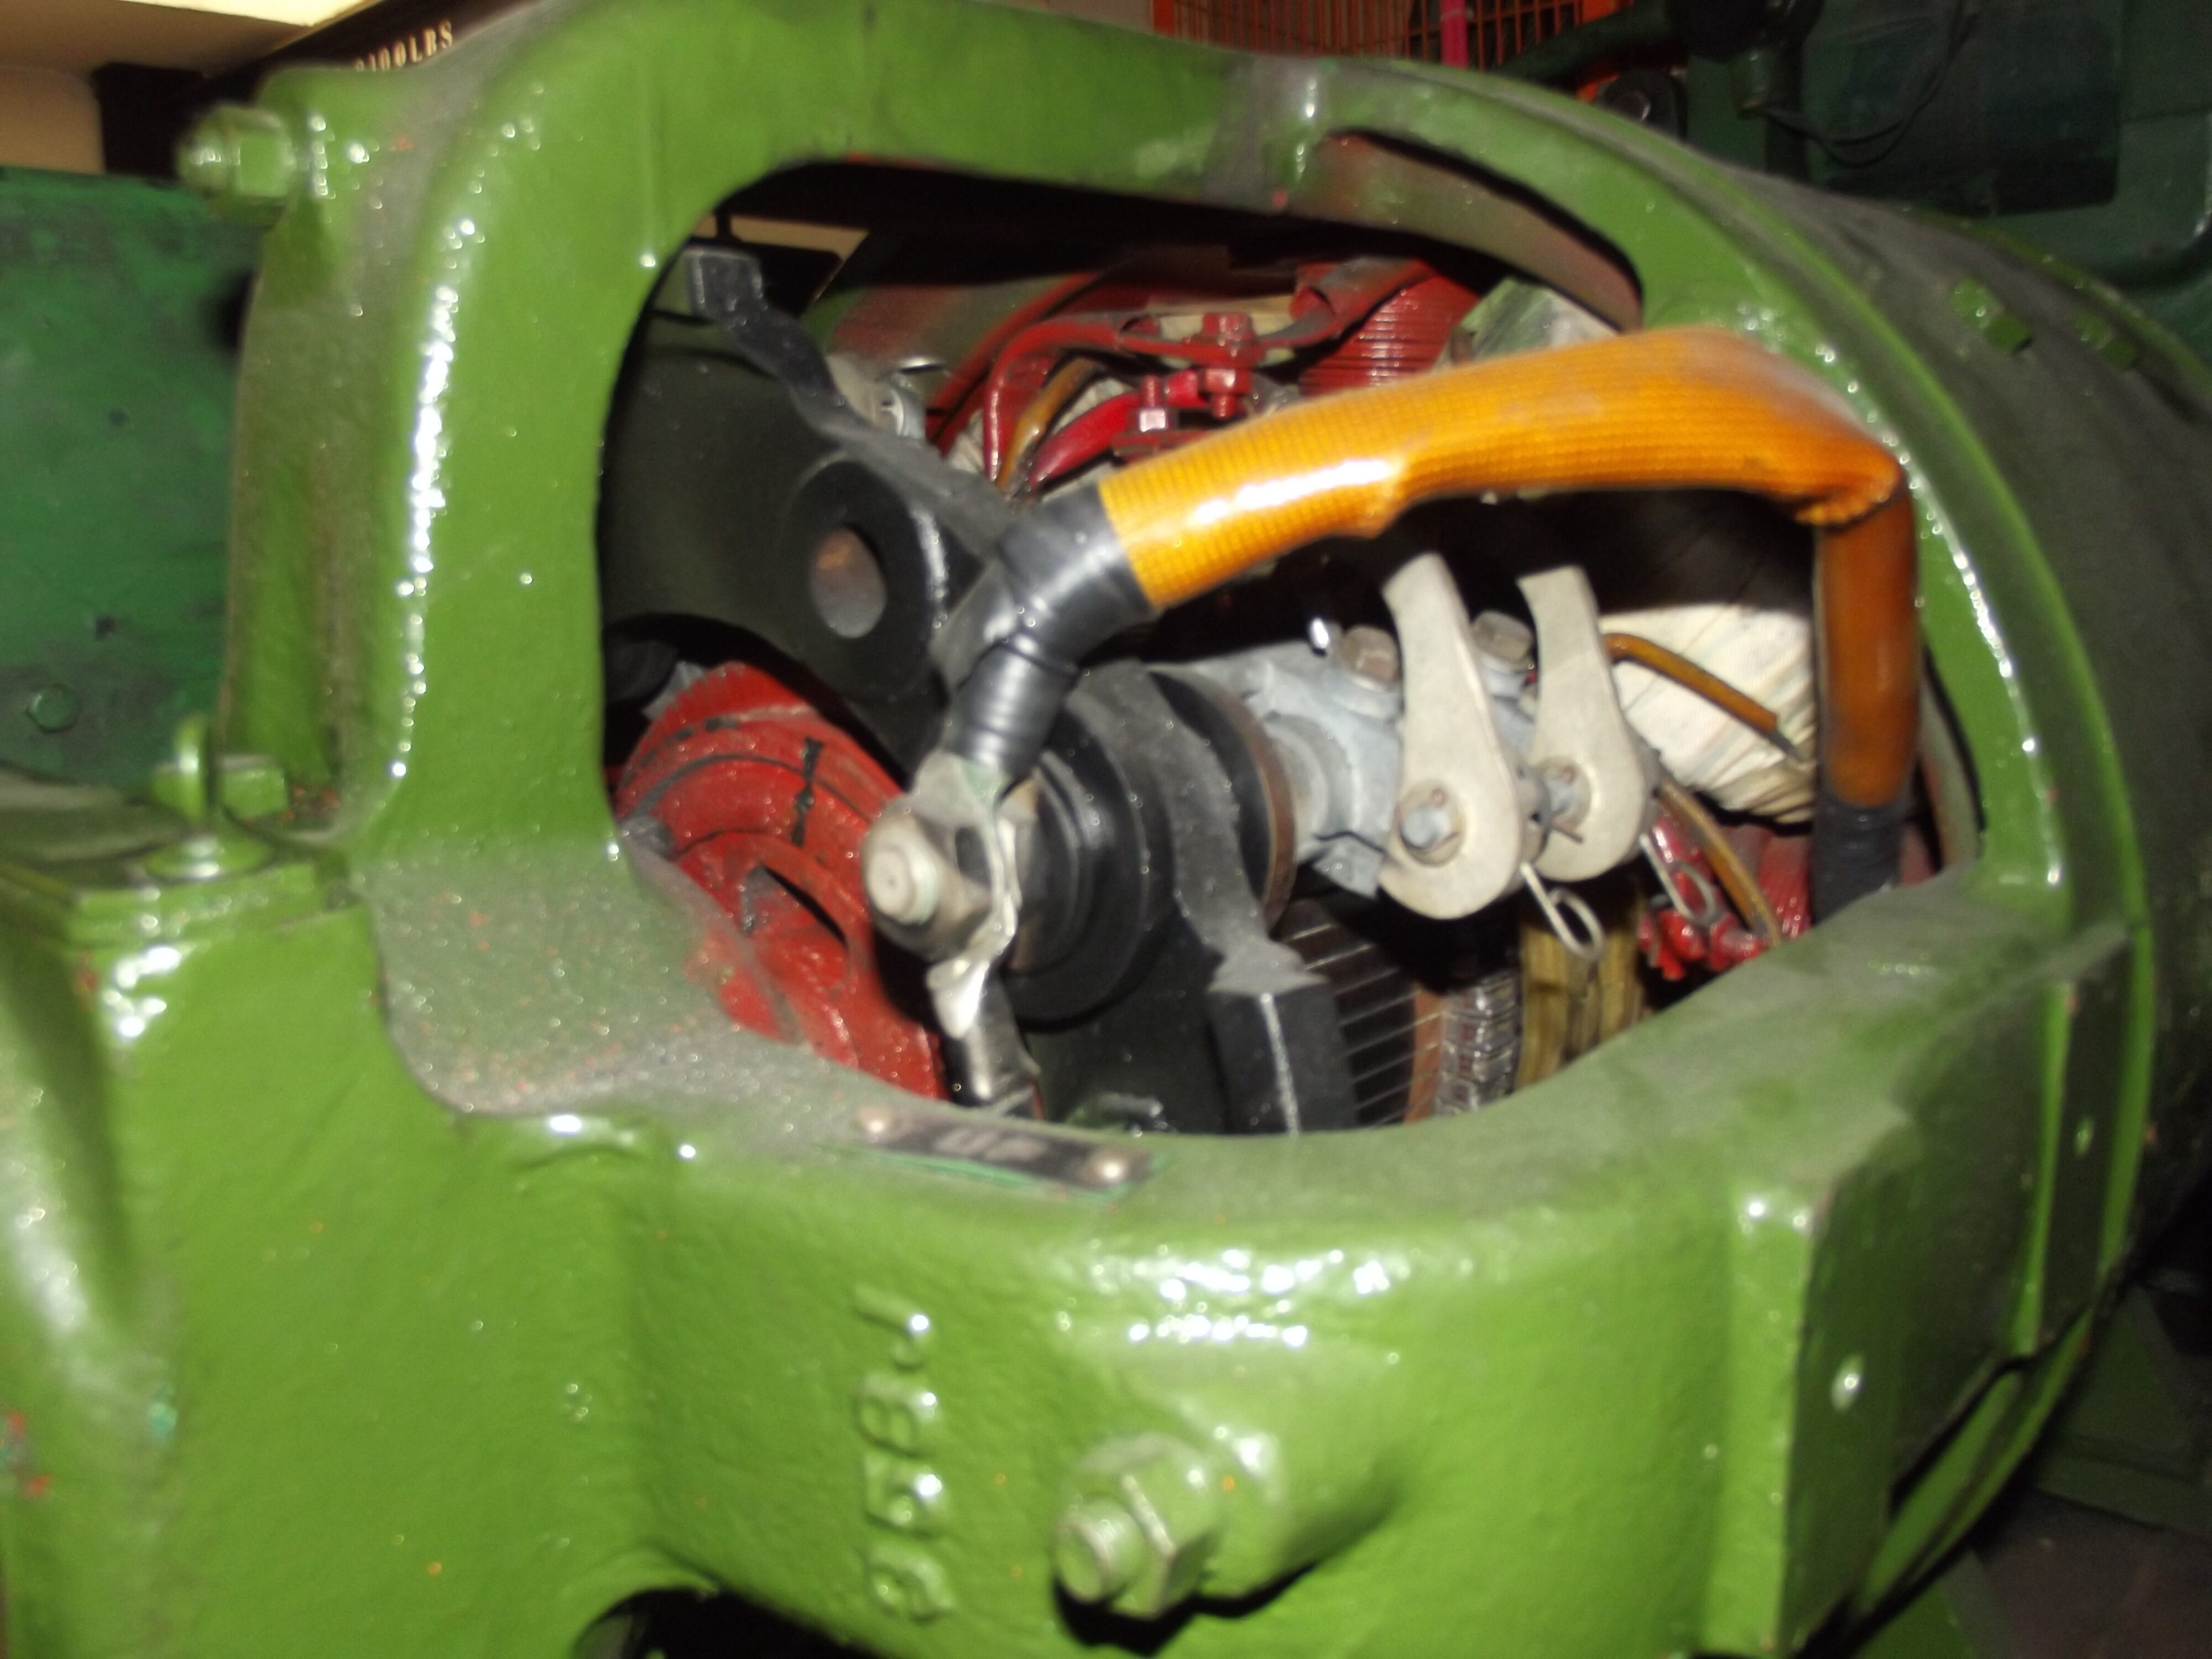 Close-up of A lift's motor, 24 Sep 2011